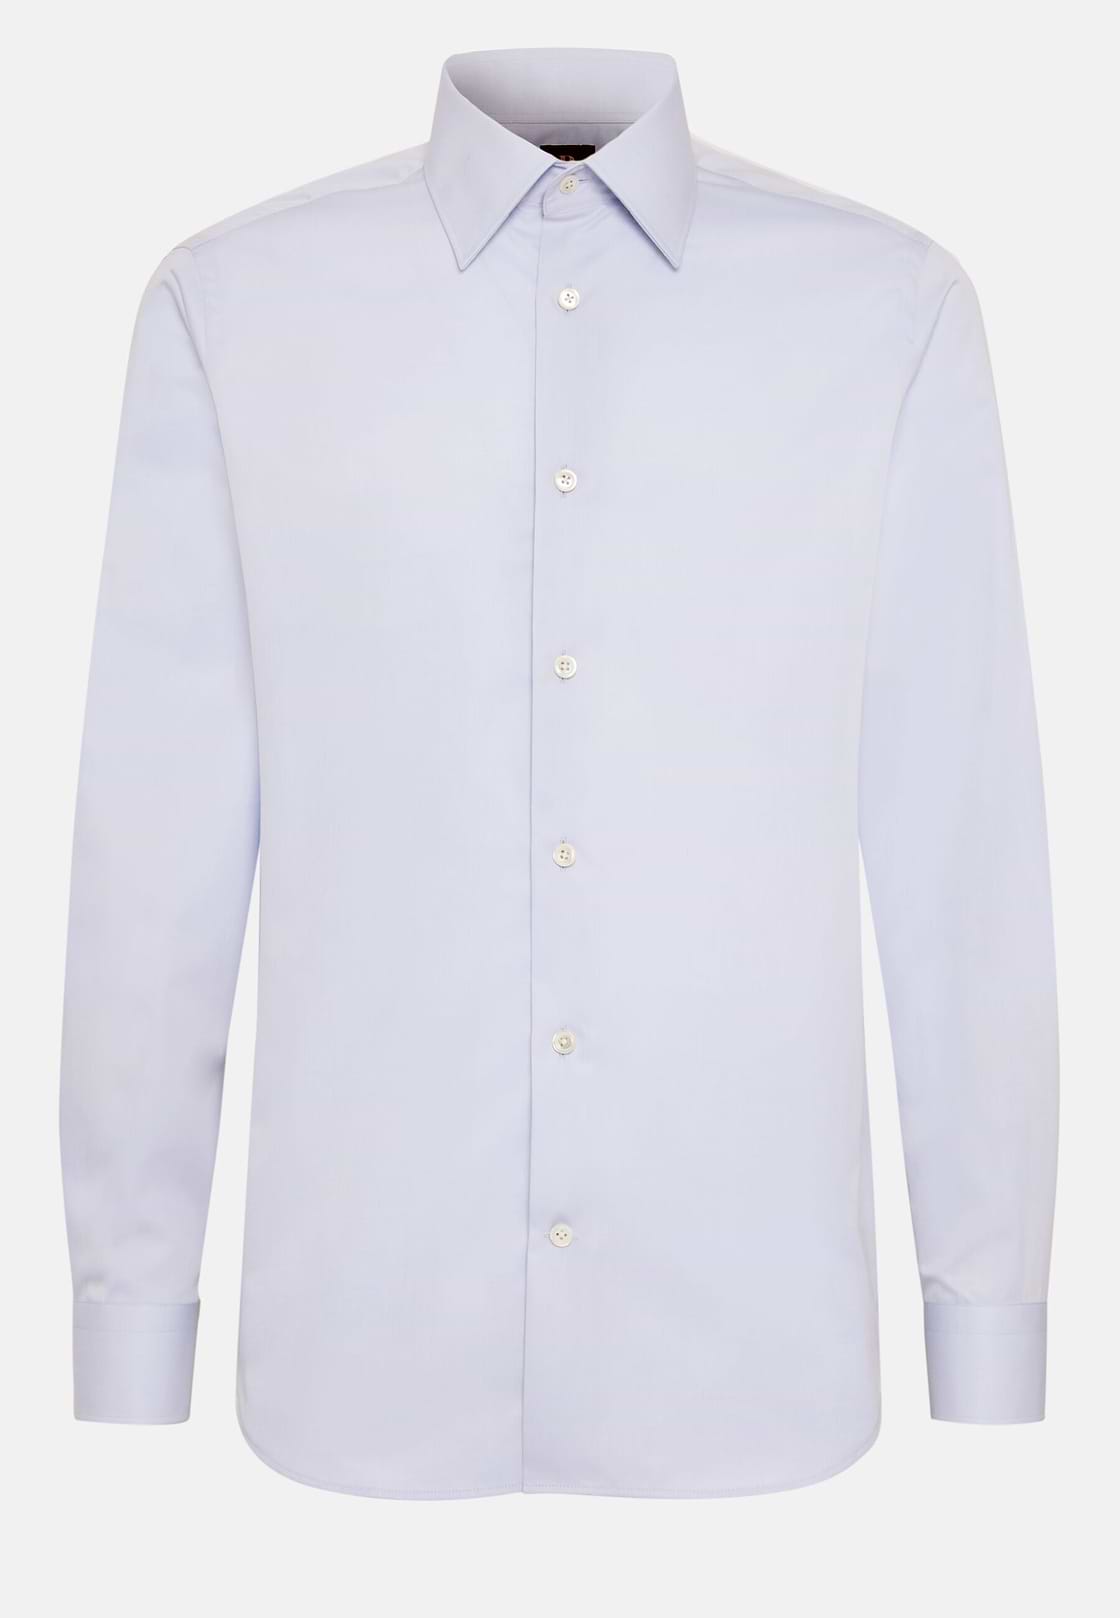 Regular Fit Sky Blue Cotton Twill Shirt, Light Blue, hi-res